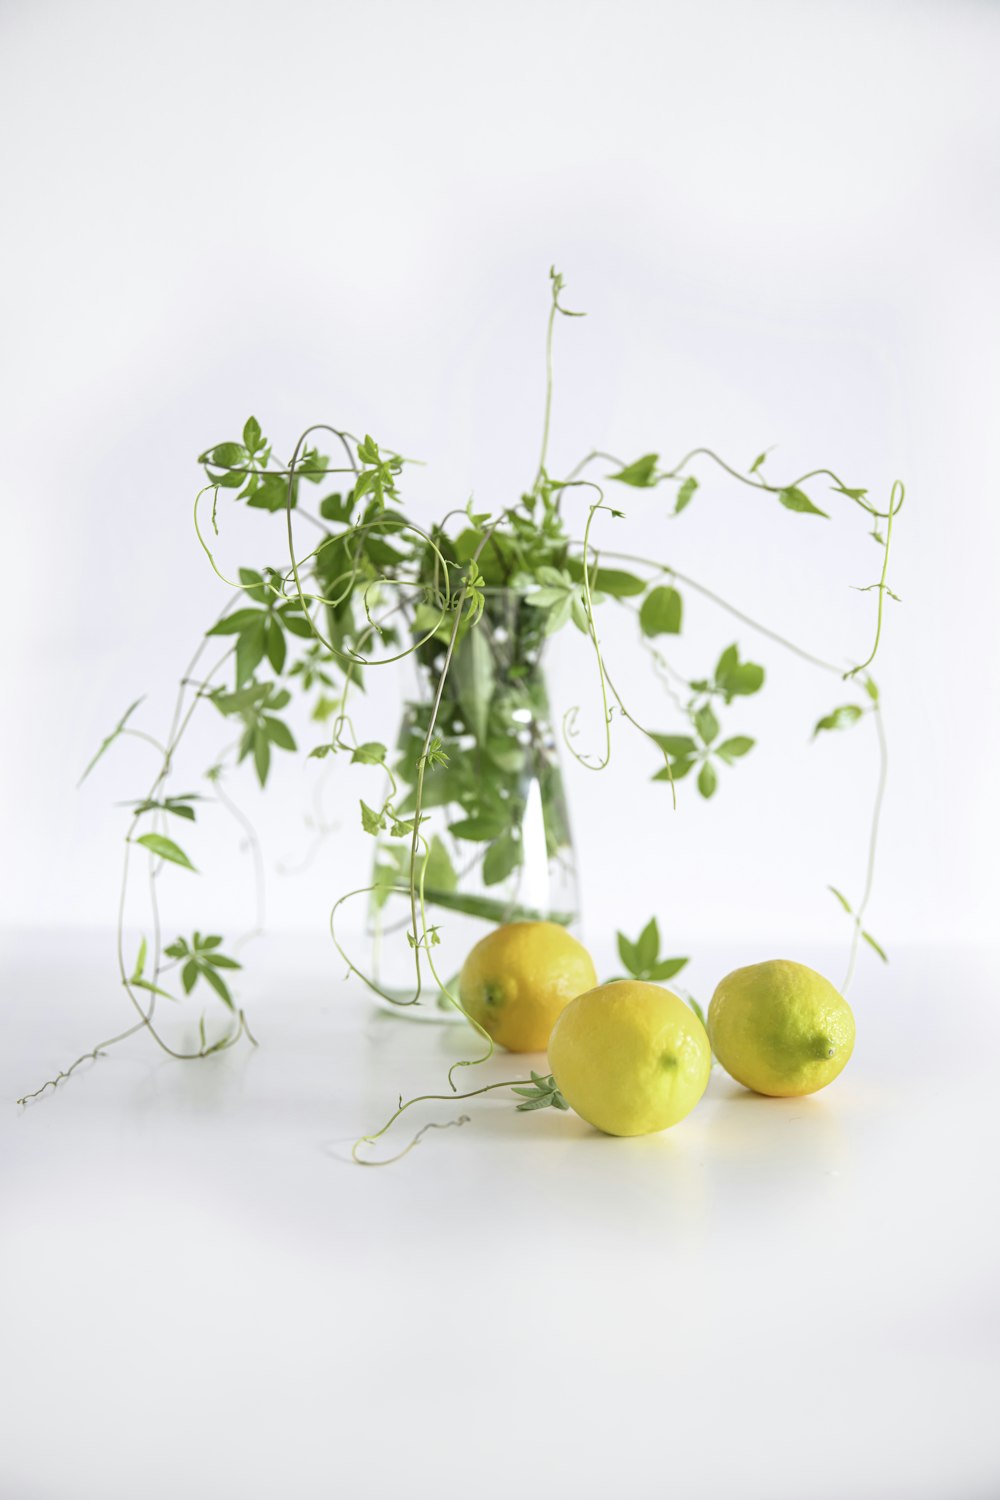 a plant with lemons